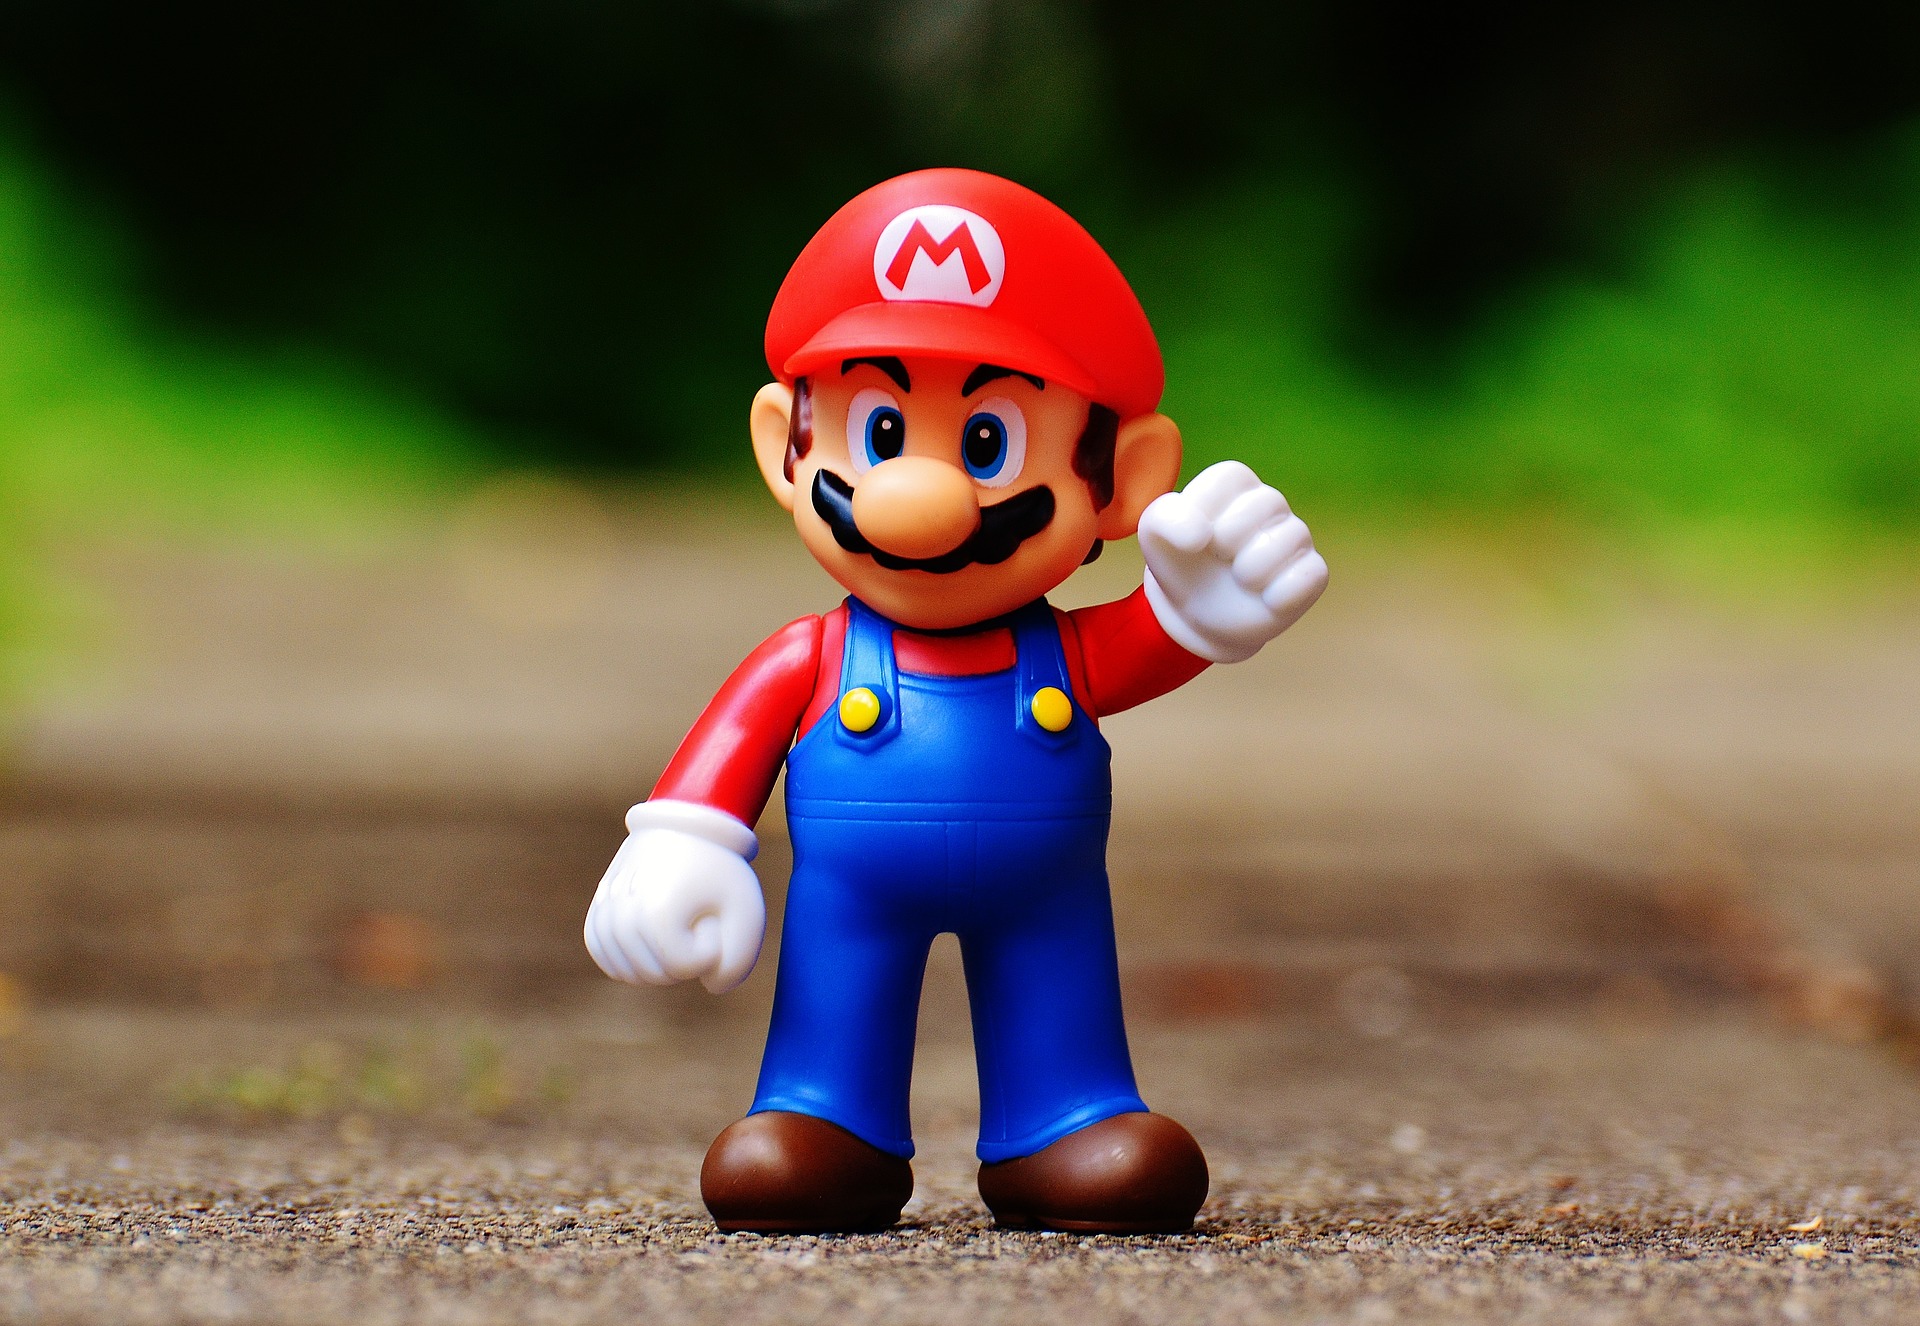 , Super Mario kart está entre os videojogos mais stressantes segundo estudo